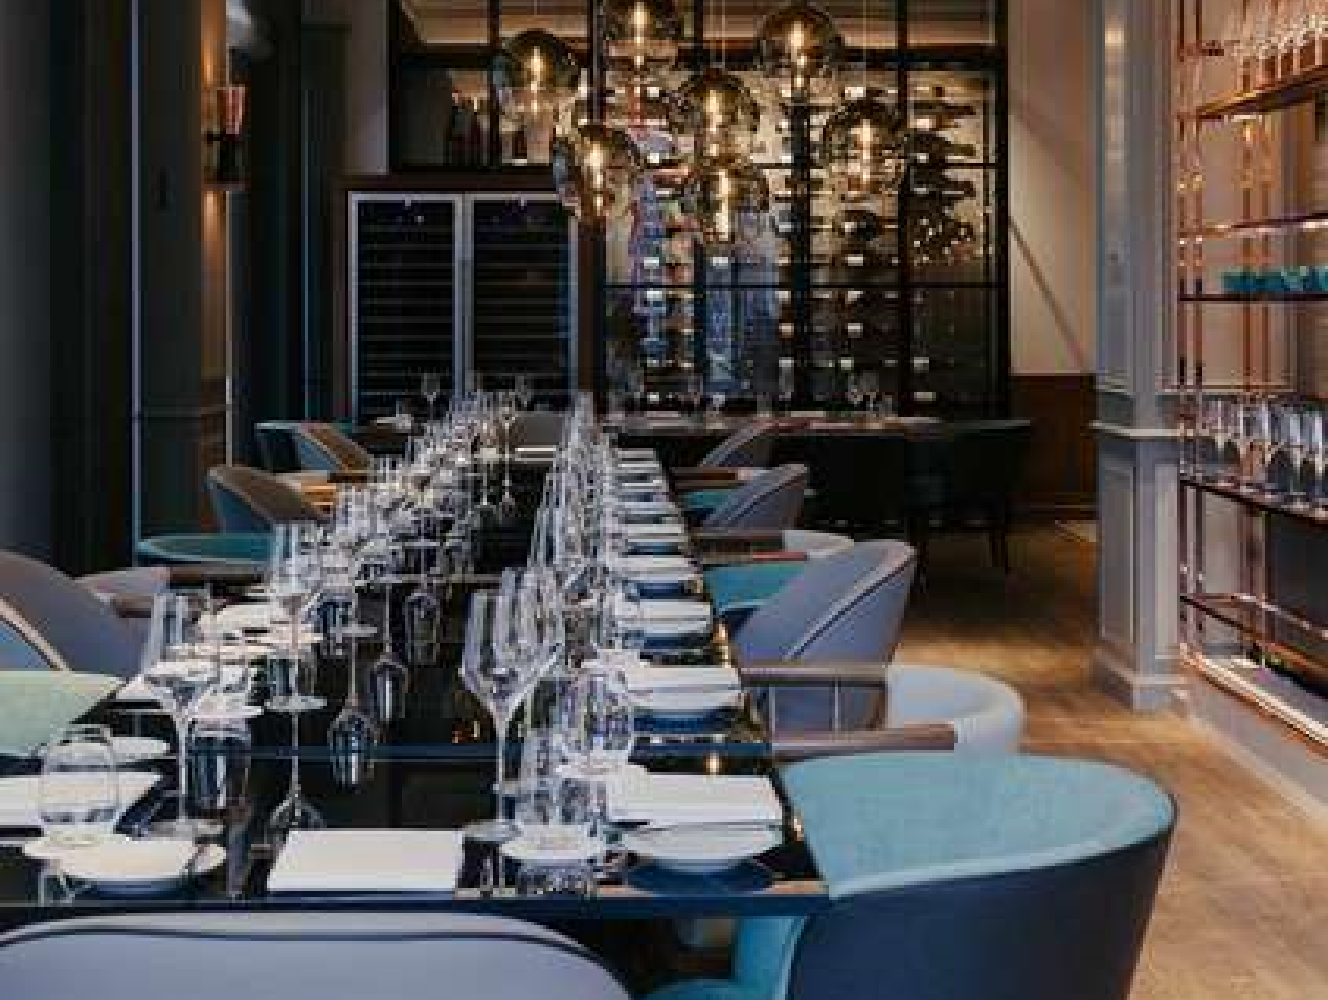 csm_Restaurant-POTS-The-Ritz-Carlton-Berlin-Foto-Aimee-Shirley-2640_b5826265a8@2x